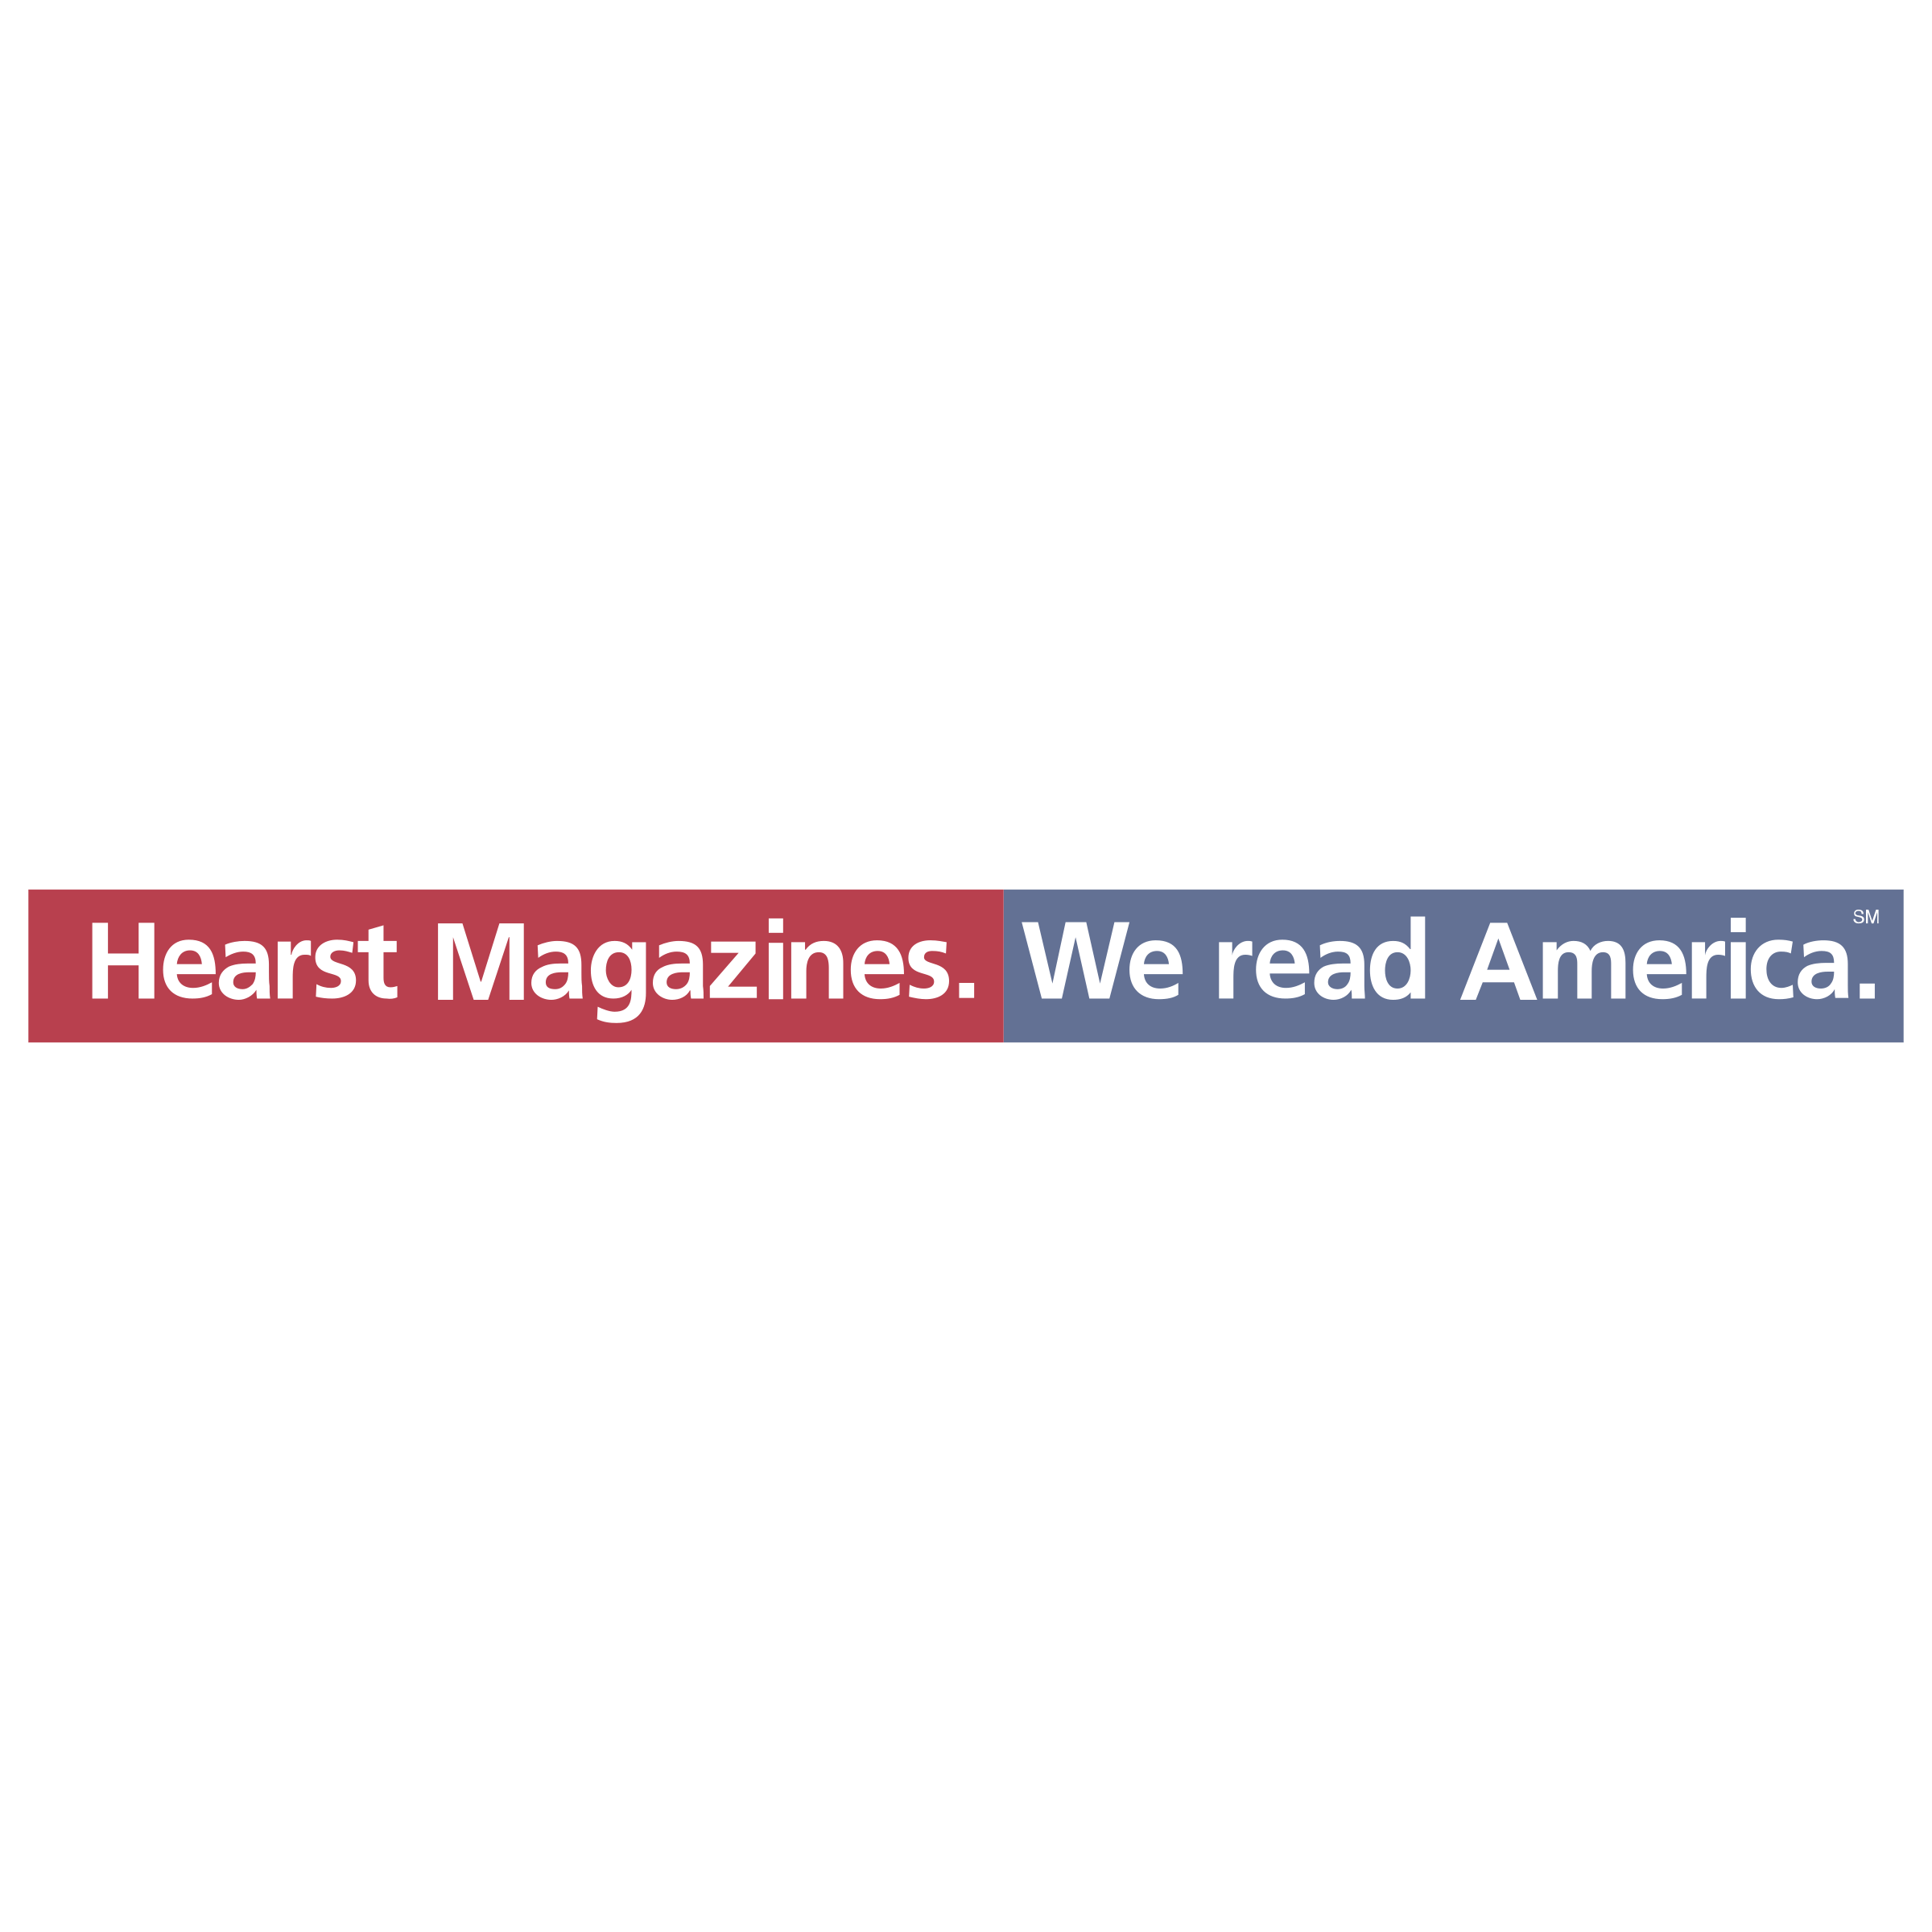 Hearst Logo - Hearst Magazines Logo PNG Transparent & SVG Vector - Freebie Supply